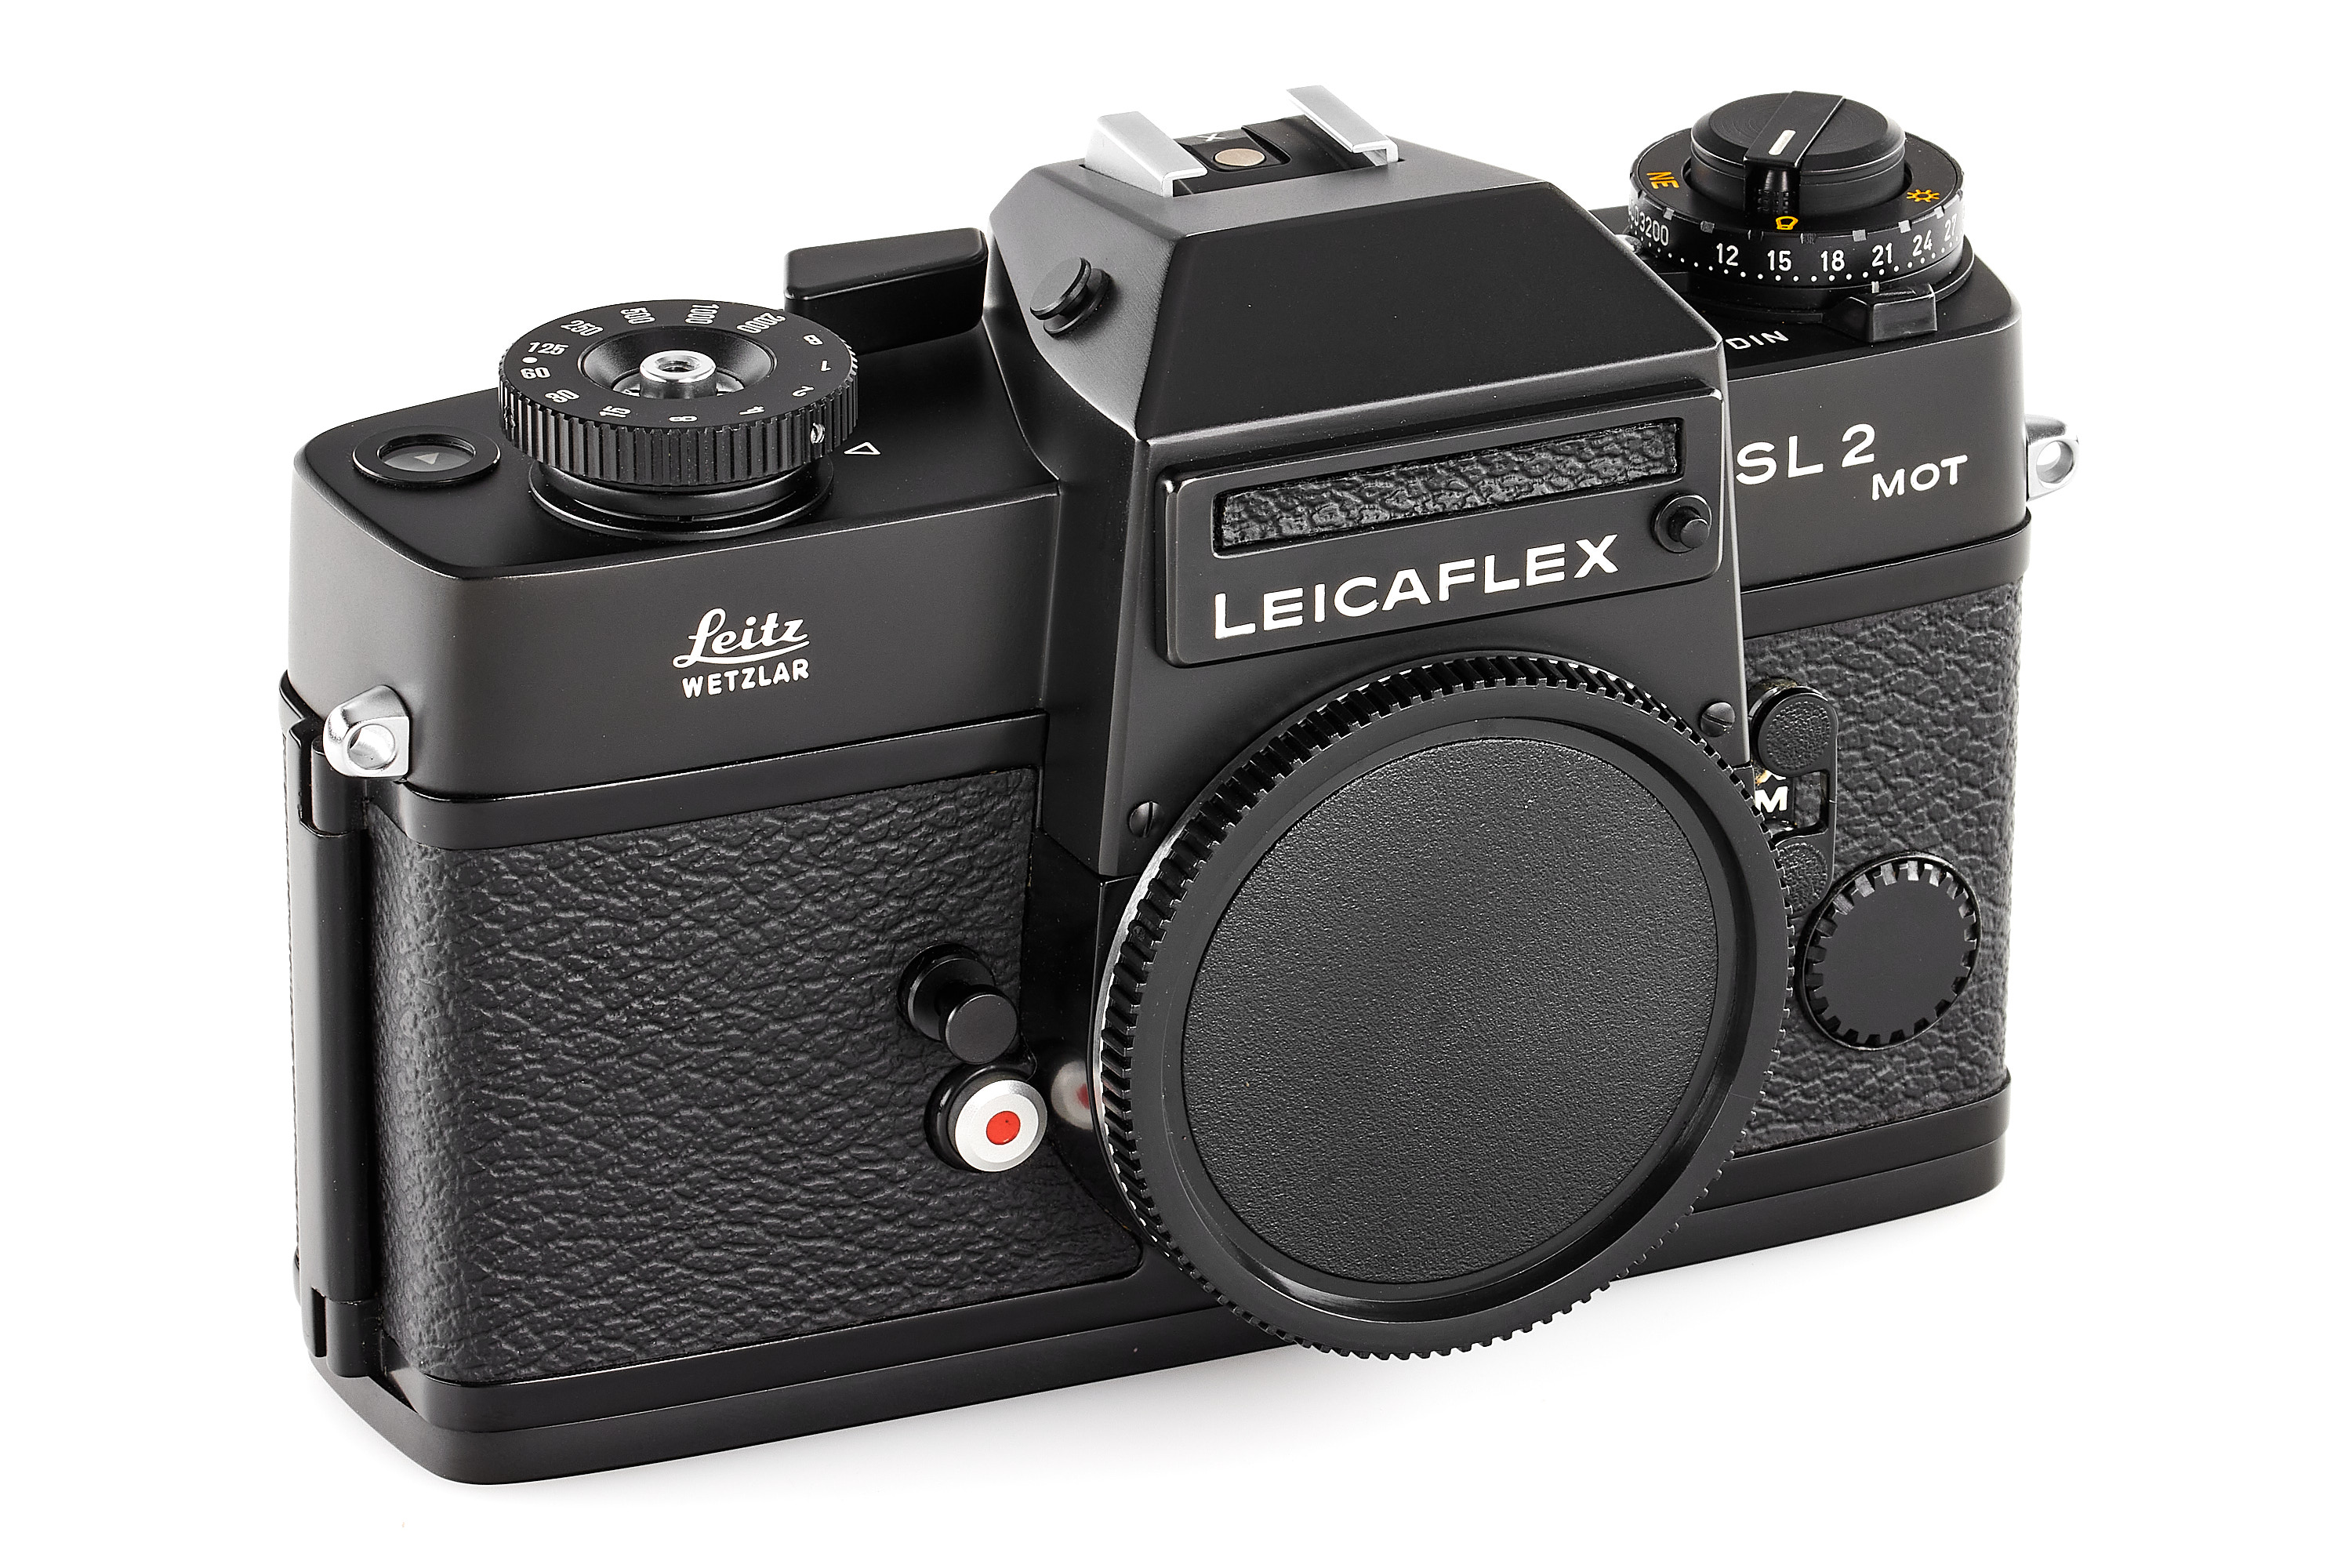 Leicaflex SL2 MOT black